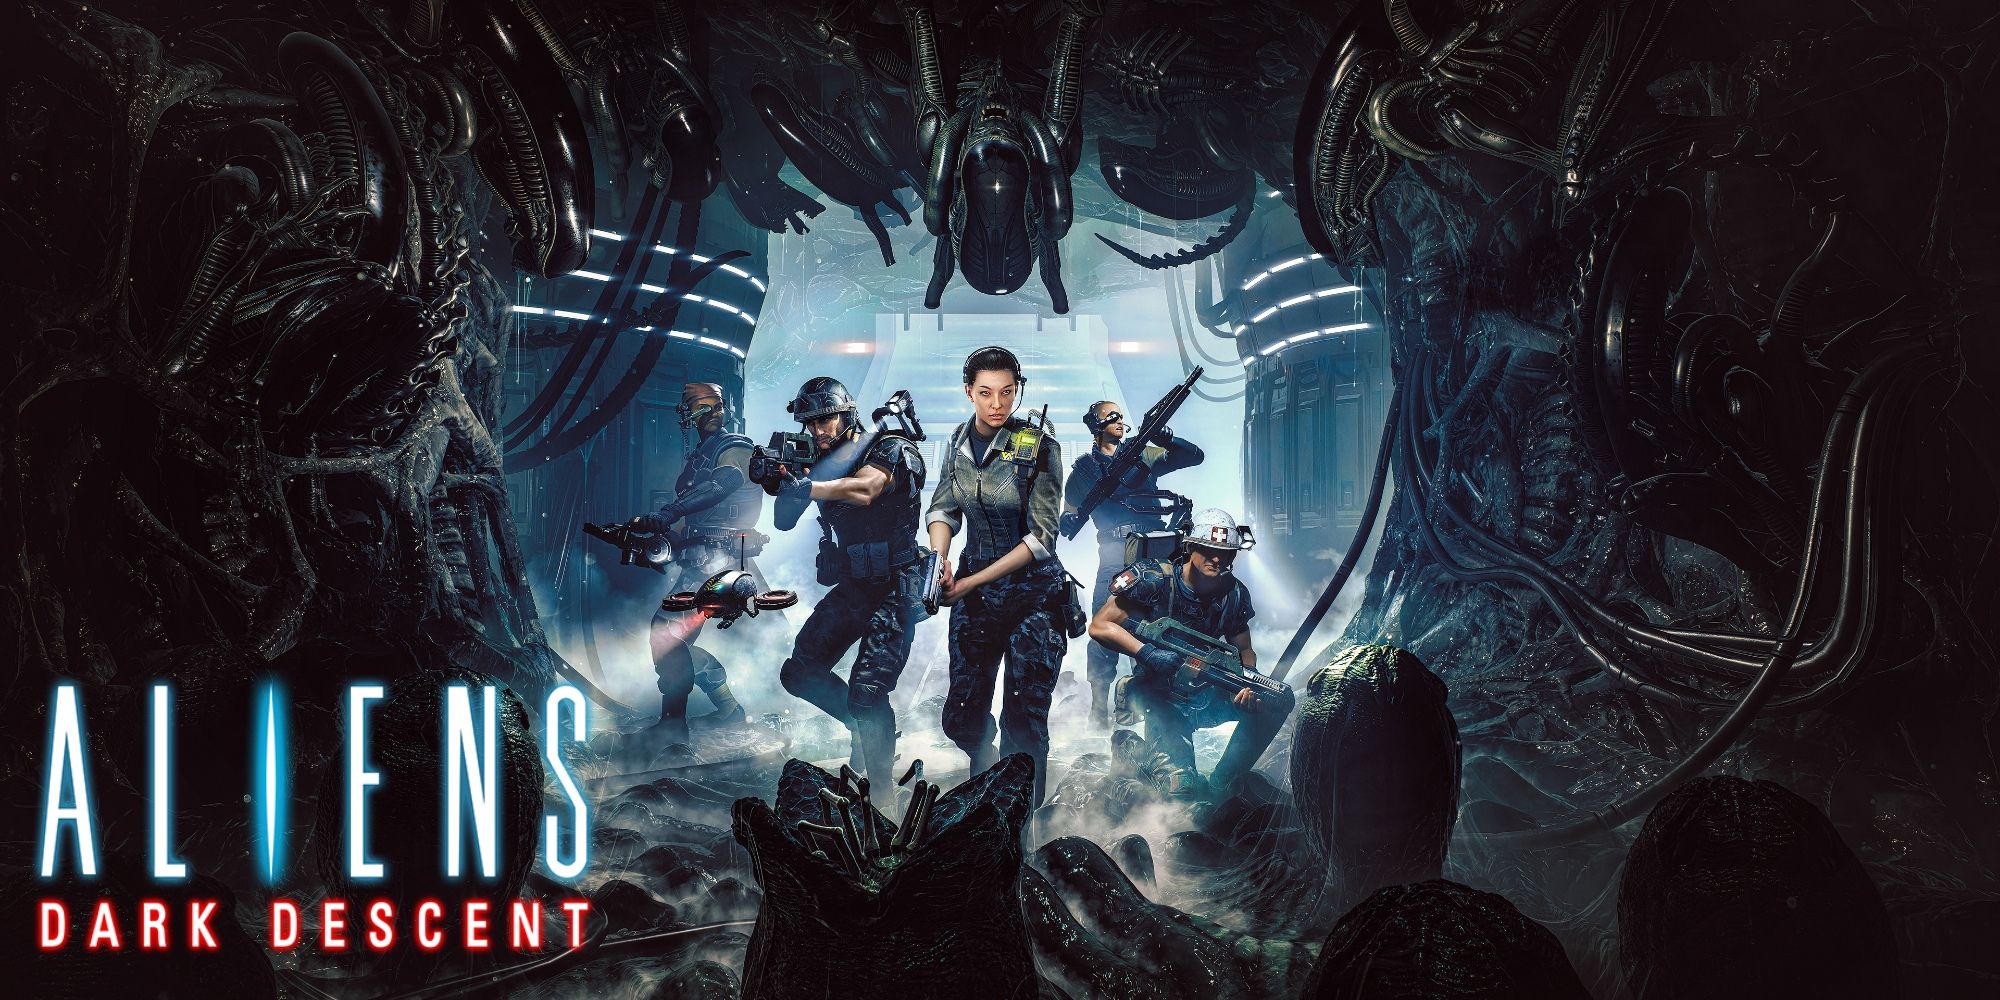 The cover image for Aliens: Dark Descent